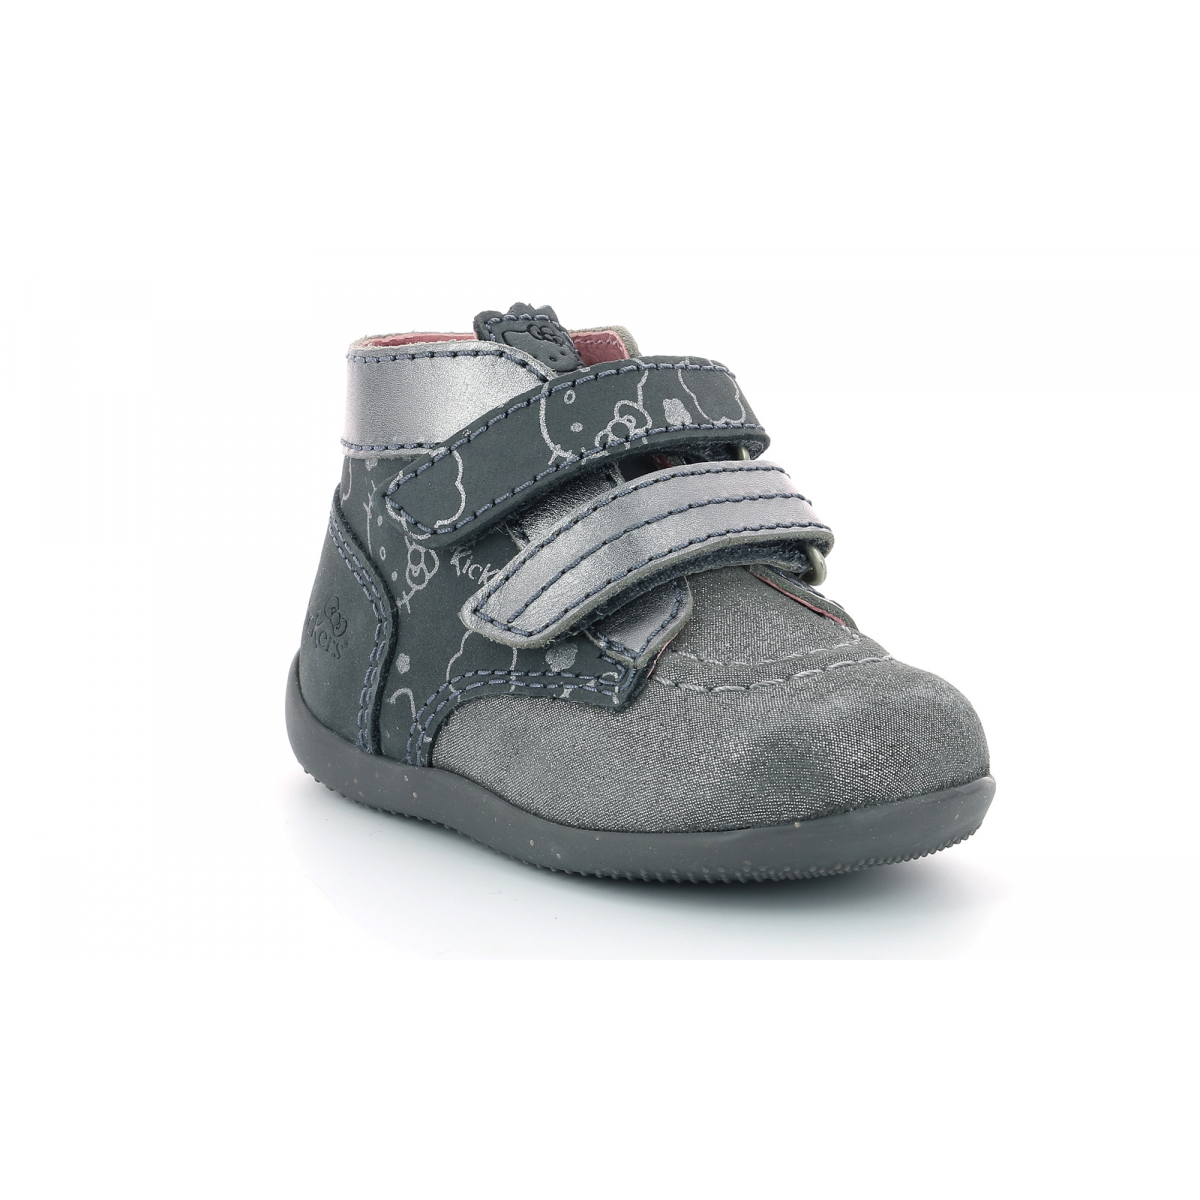 Kickers Baby Girls’ Bonkro-2 Boots